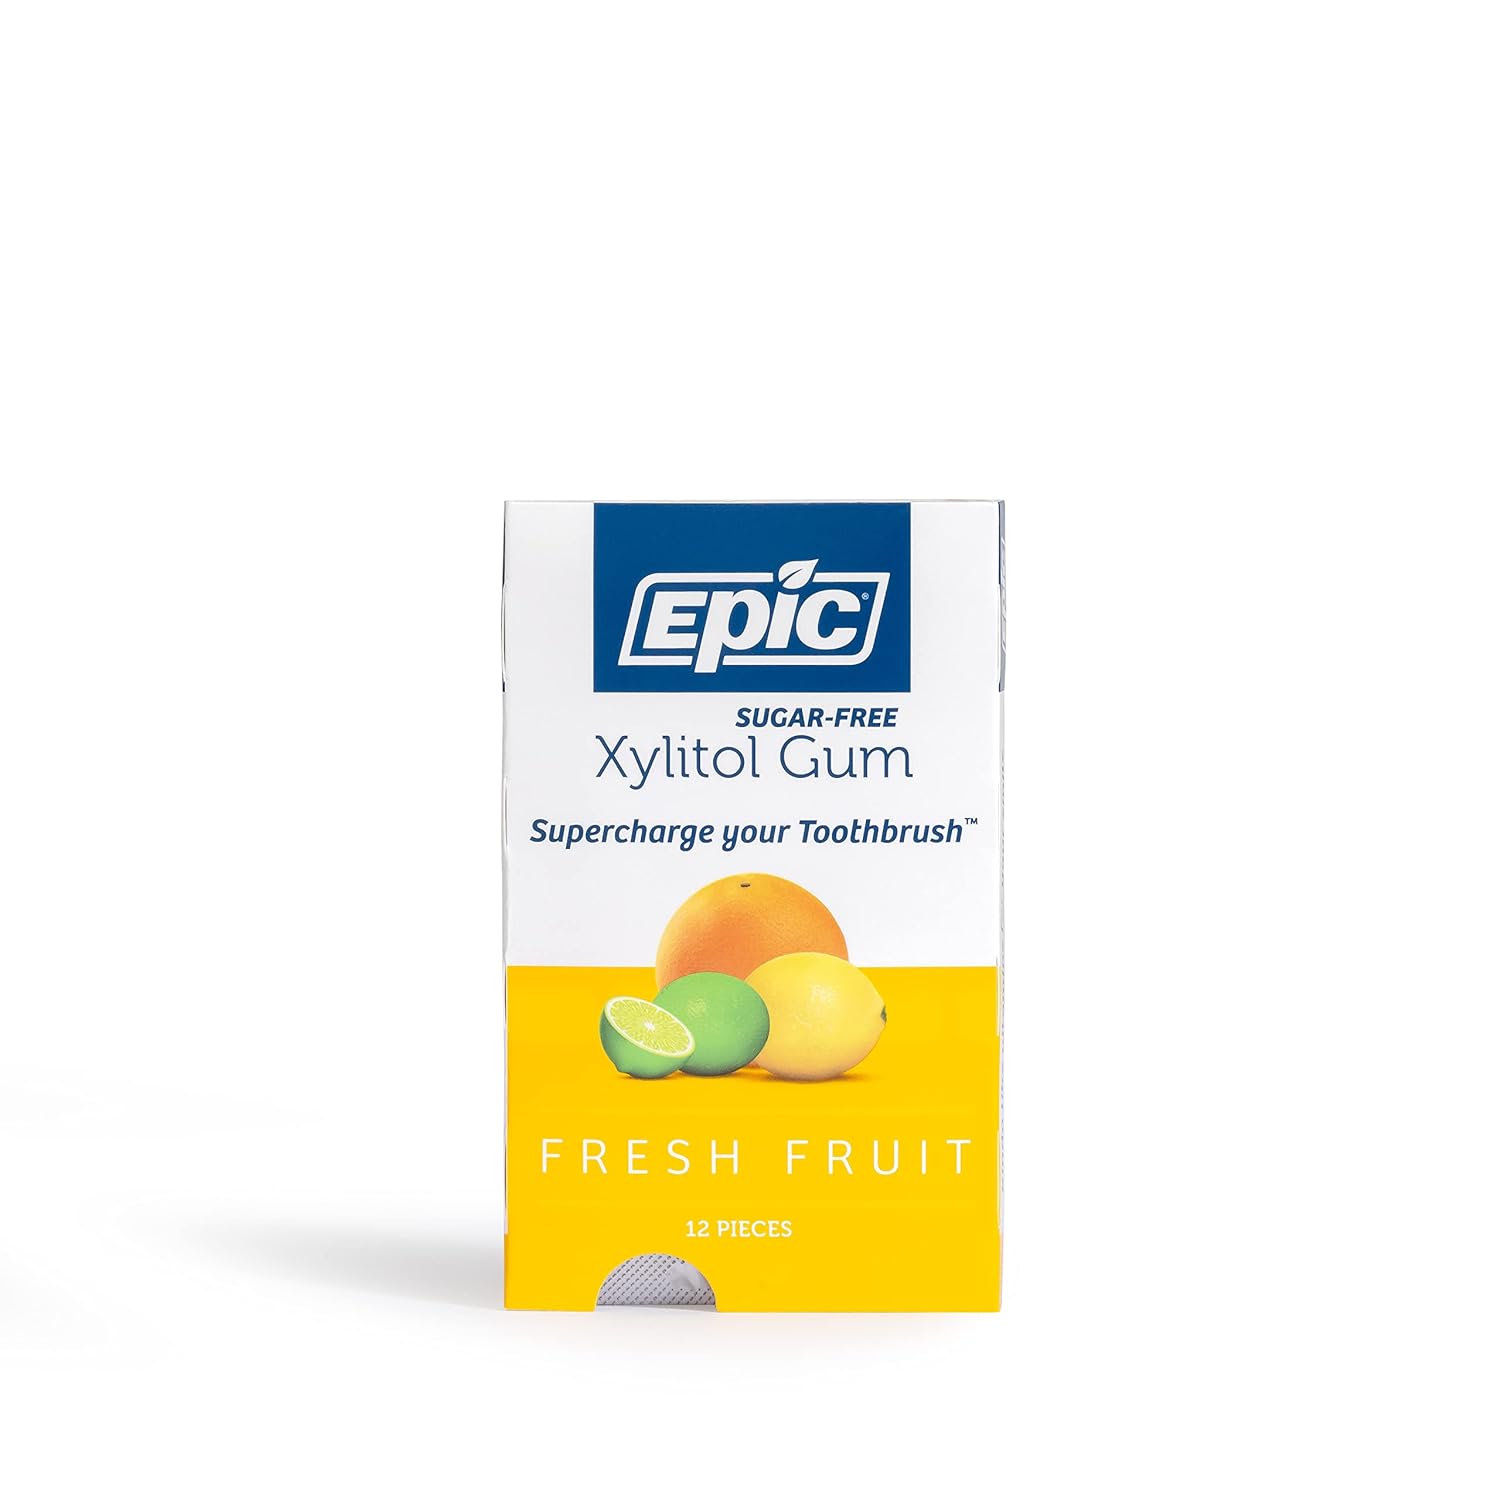 Epic Xylitol Chewing Gum - Sugar Free & Aspartame Free Chewing Gum Sweetened w/Xylitol for Dry Mouth & Gum Health (Fresh Fruit, 12-Piece Pack, 12 Packs) : Breath Freshening Gum : Grocery & Gourmet Food